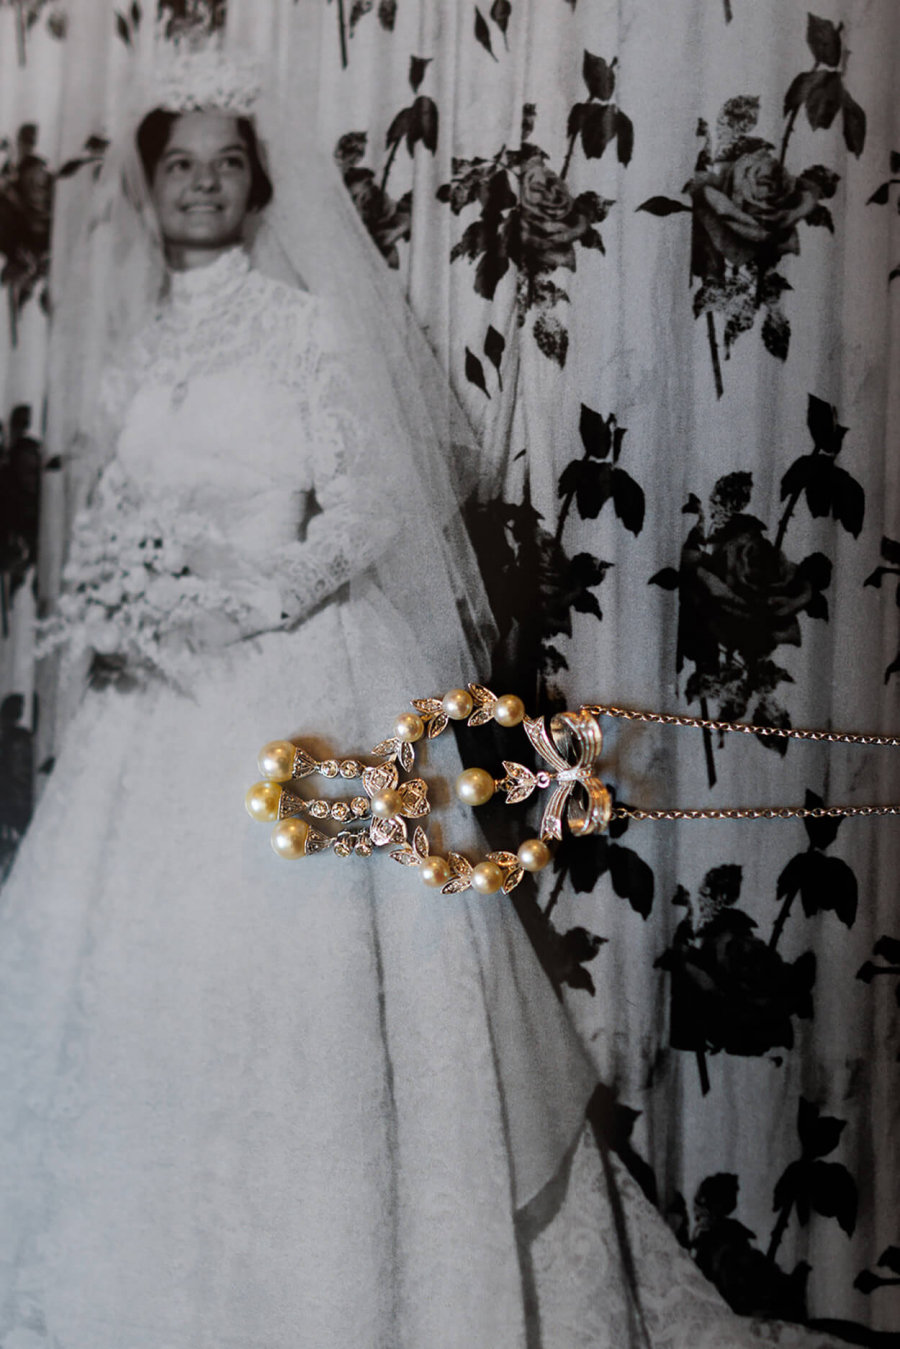  Vestido-de-noiva-100-anos (36)